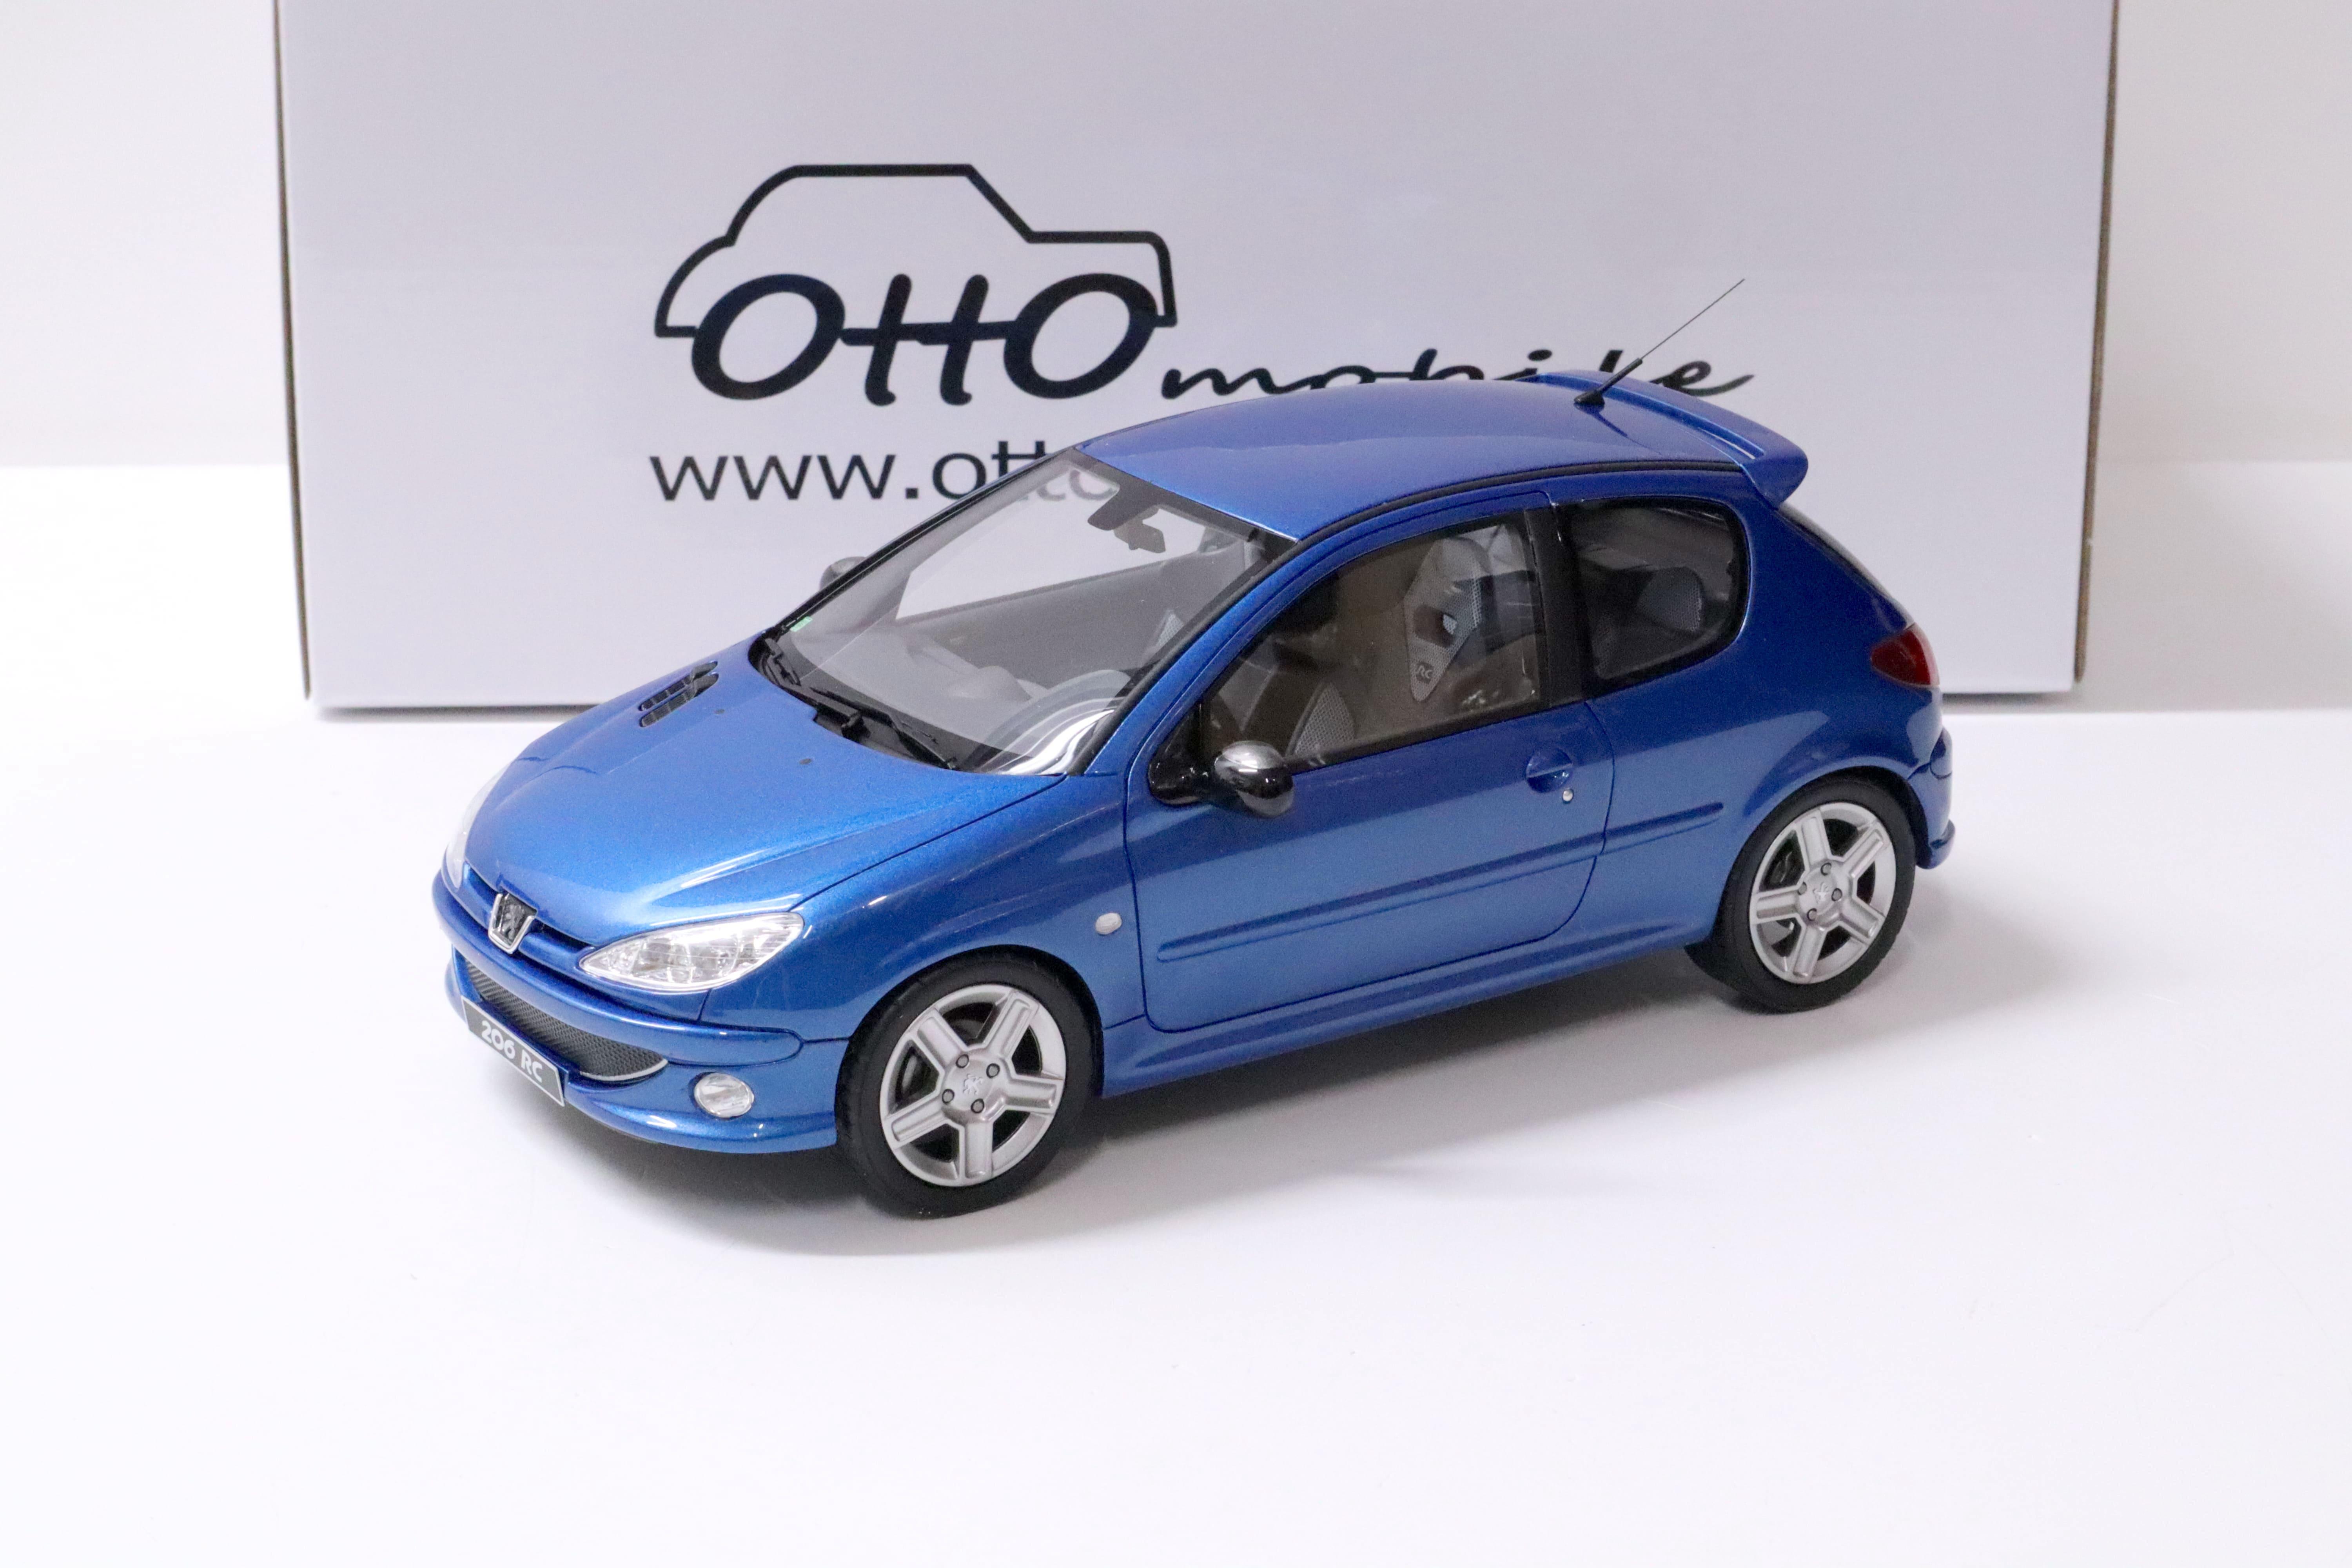 1:18 OTTO mobile OT917 Peugeot 206 RC Recife blue 2003